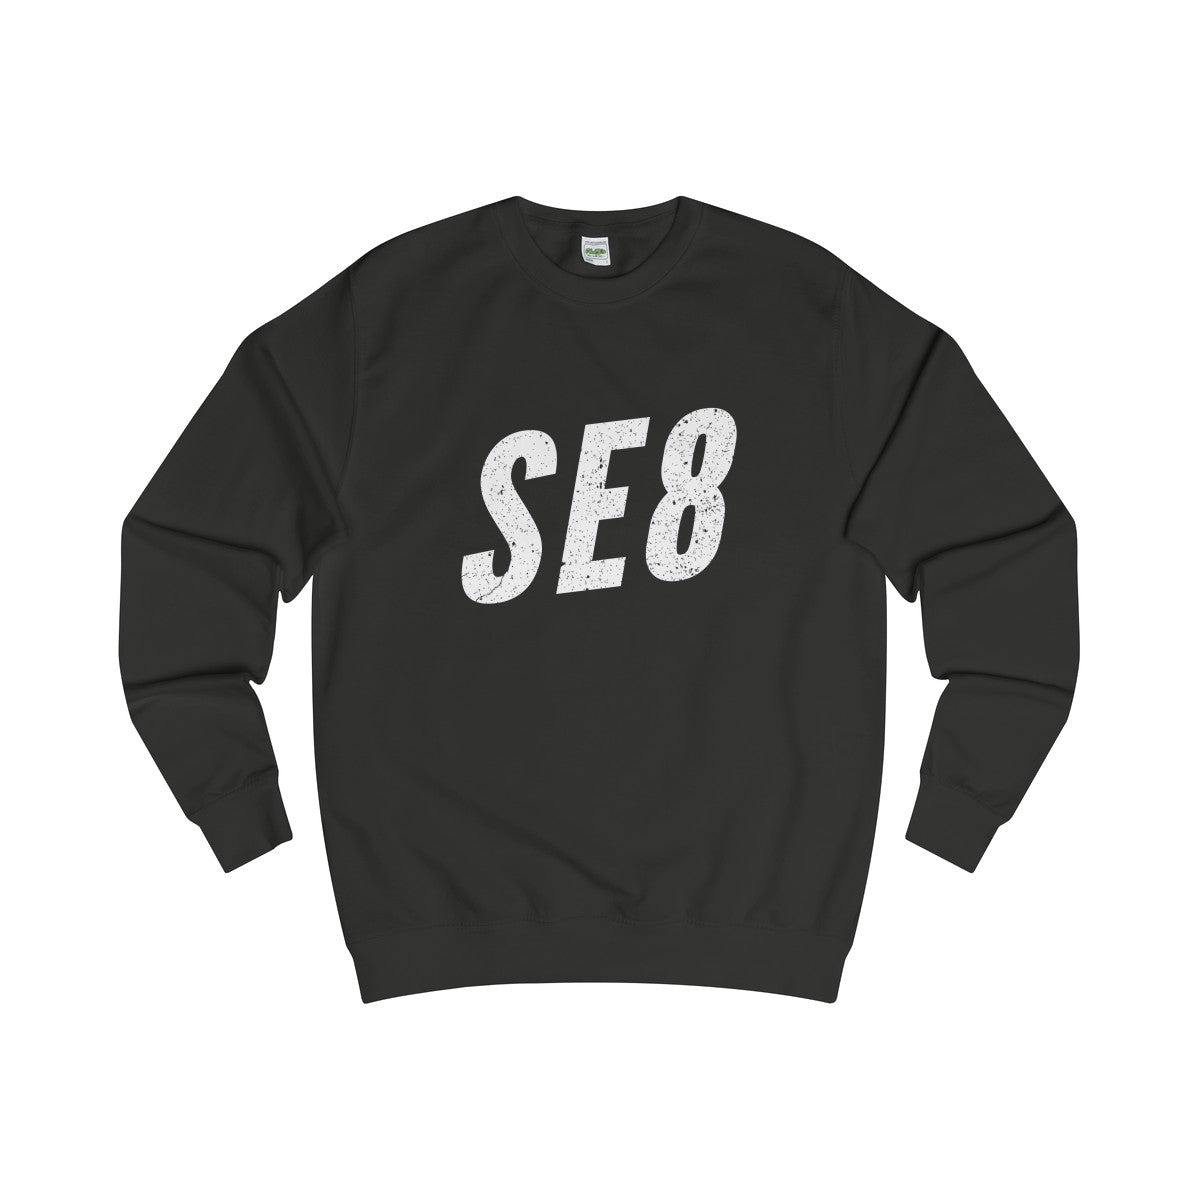 Dulwich SE8 Sweater